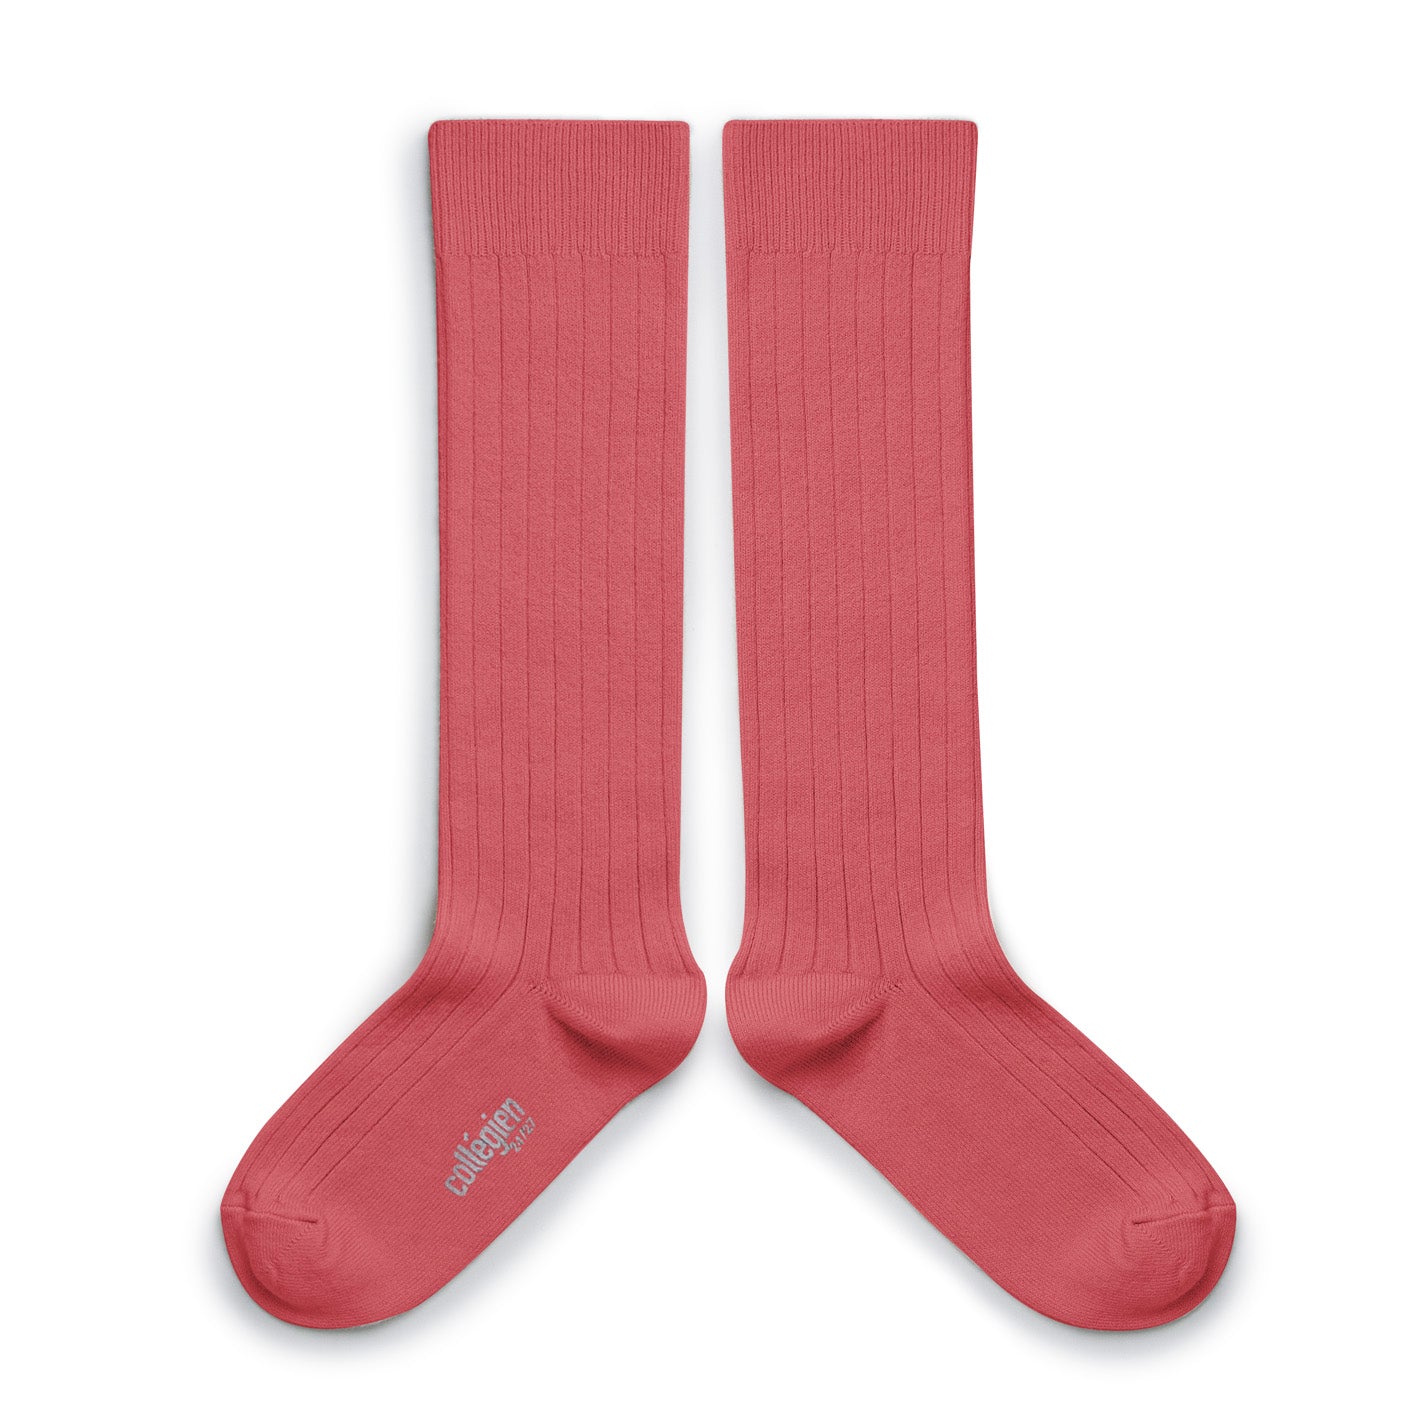 La Haute - ribbed socks